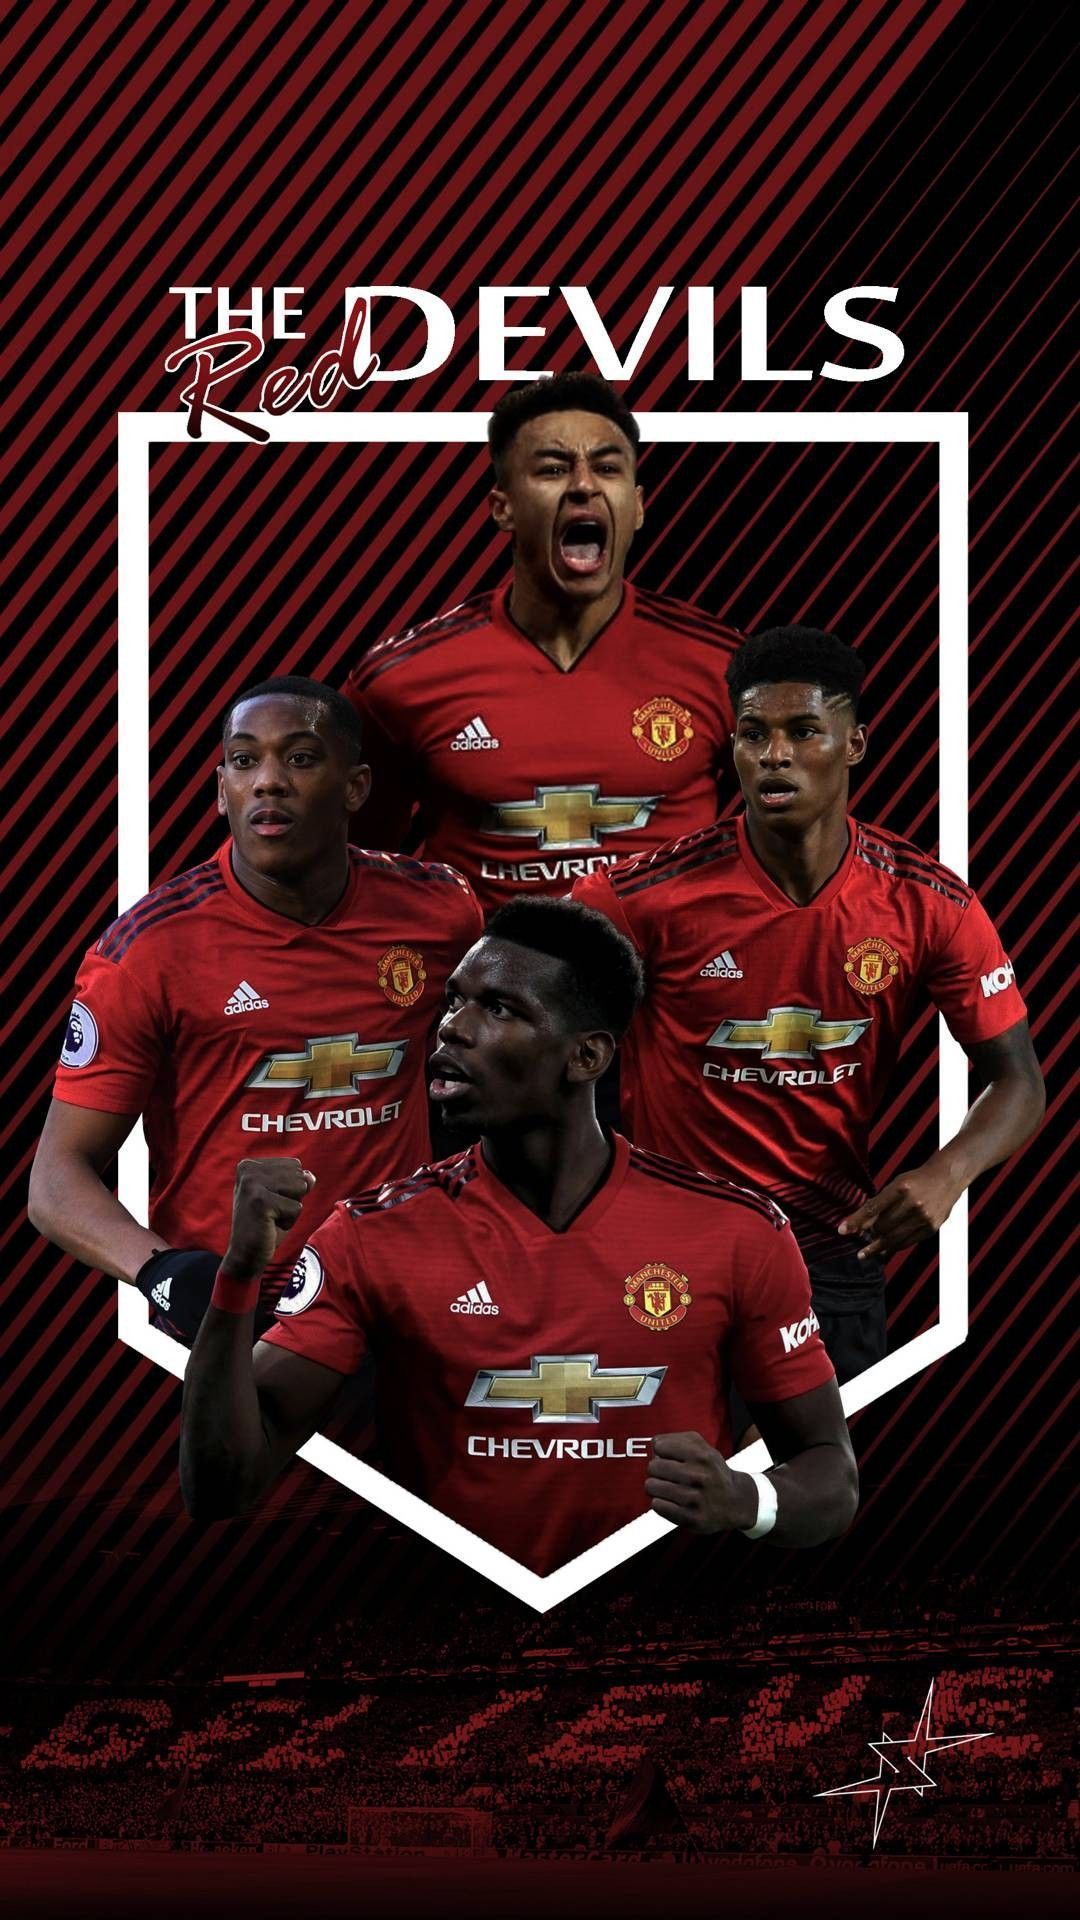 Manchester United Team Wallpaper Free Manchester United Team Background